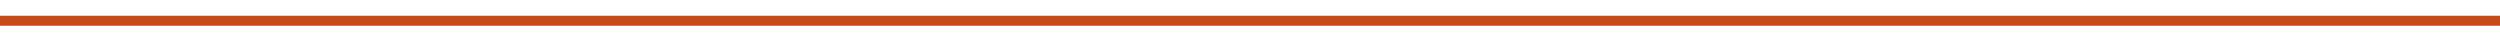 Orange horizontal line